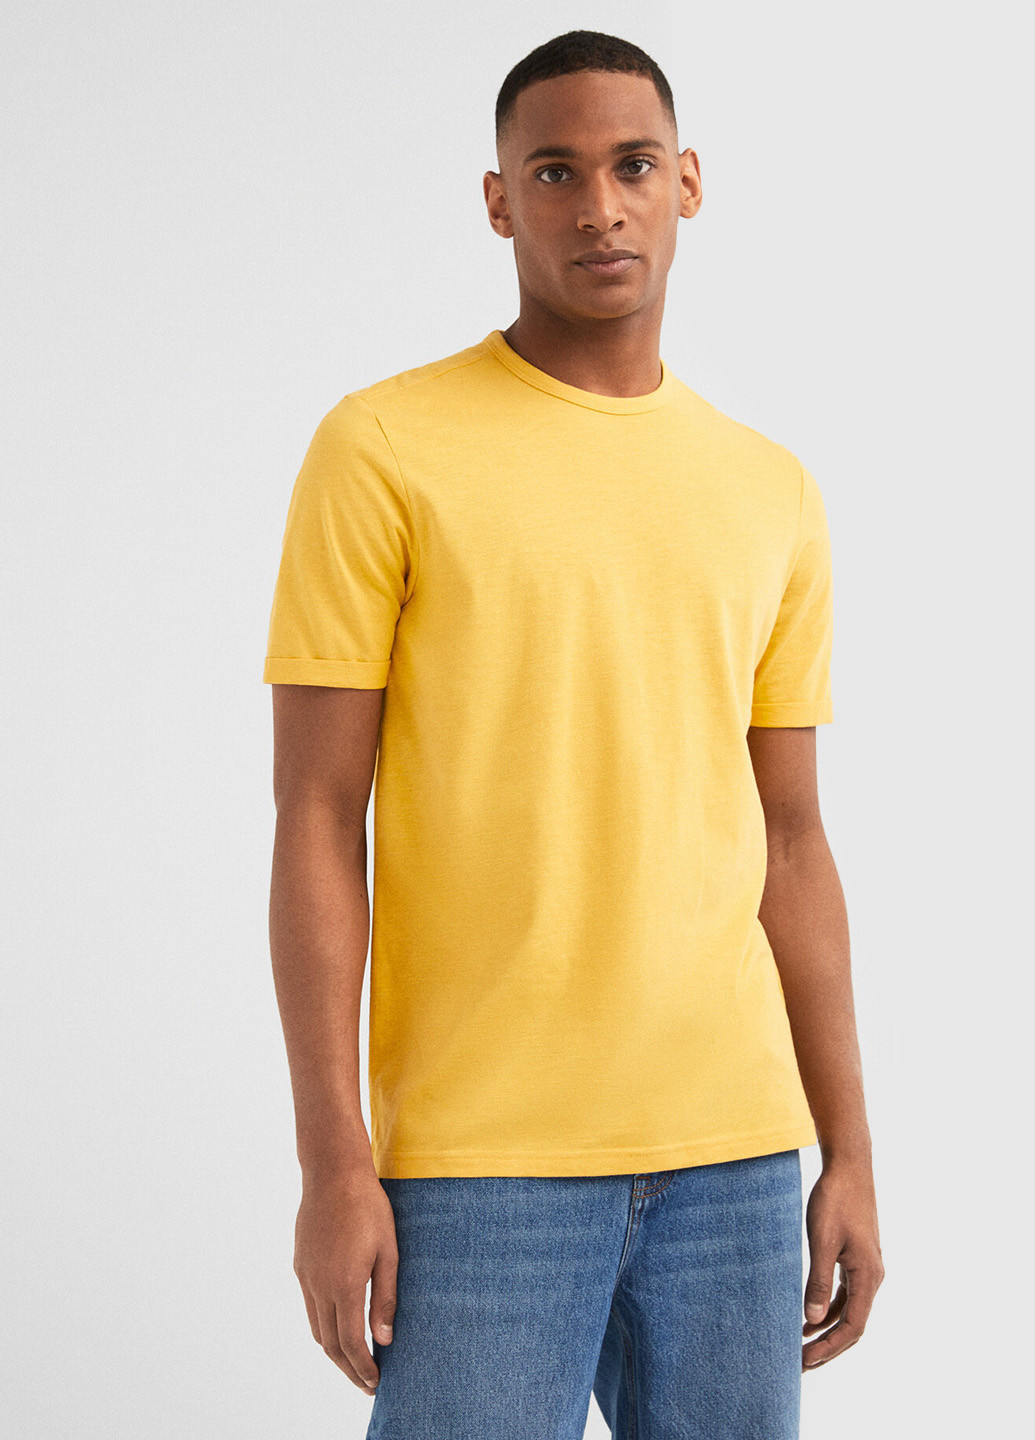 Жовта футболка Springfield